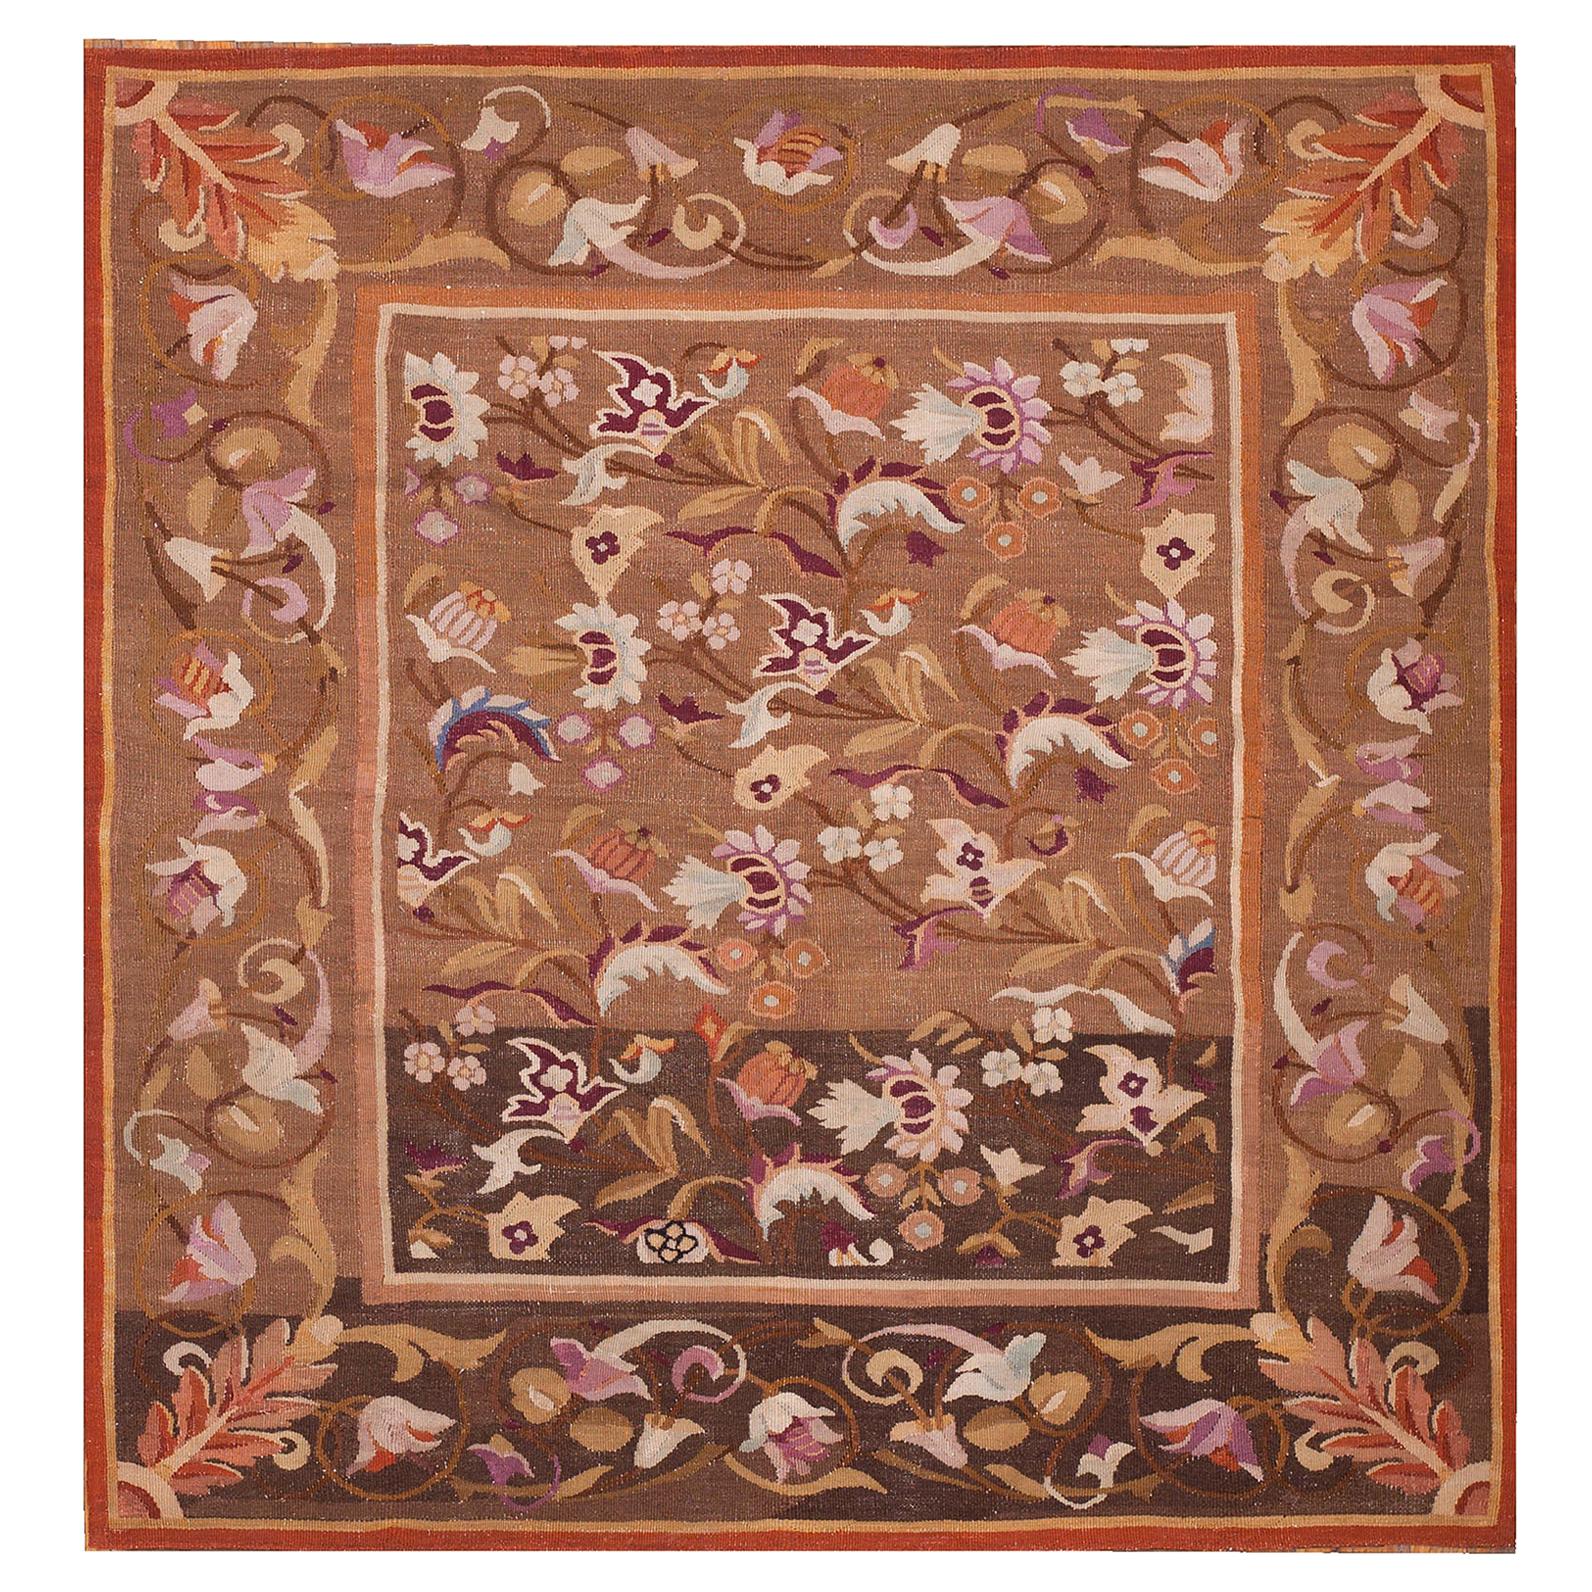 Antique French Aubusson Carpet -  Louis Philippe - Period